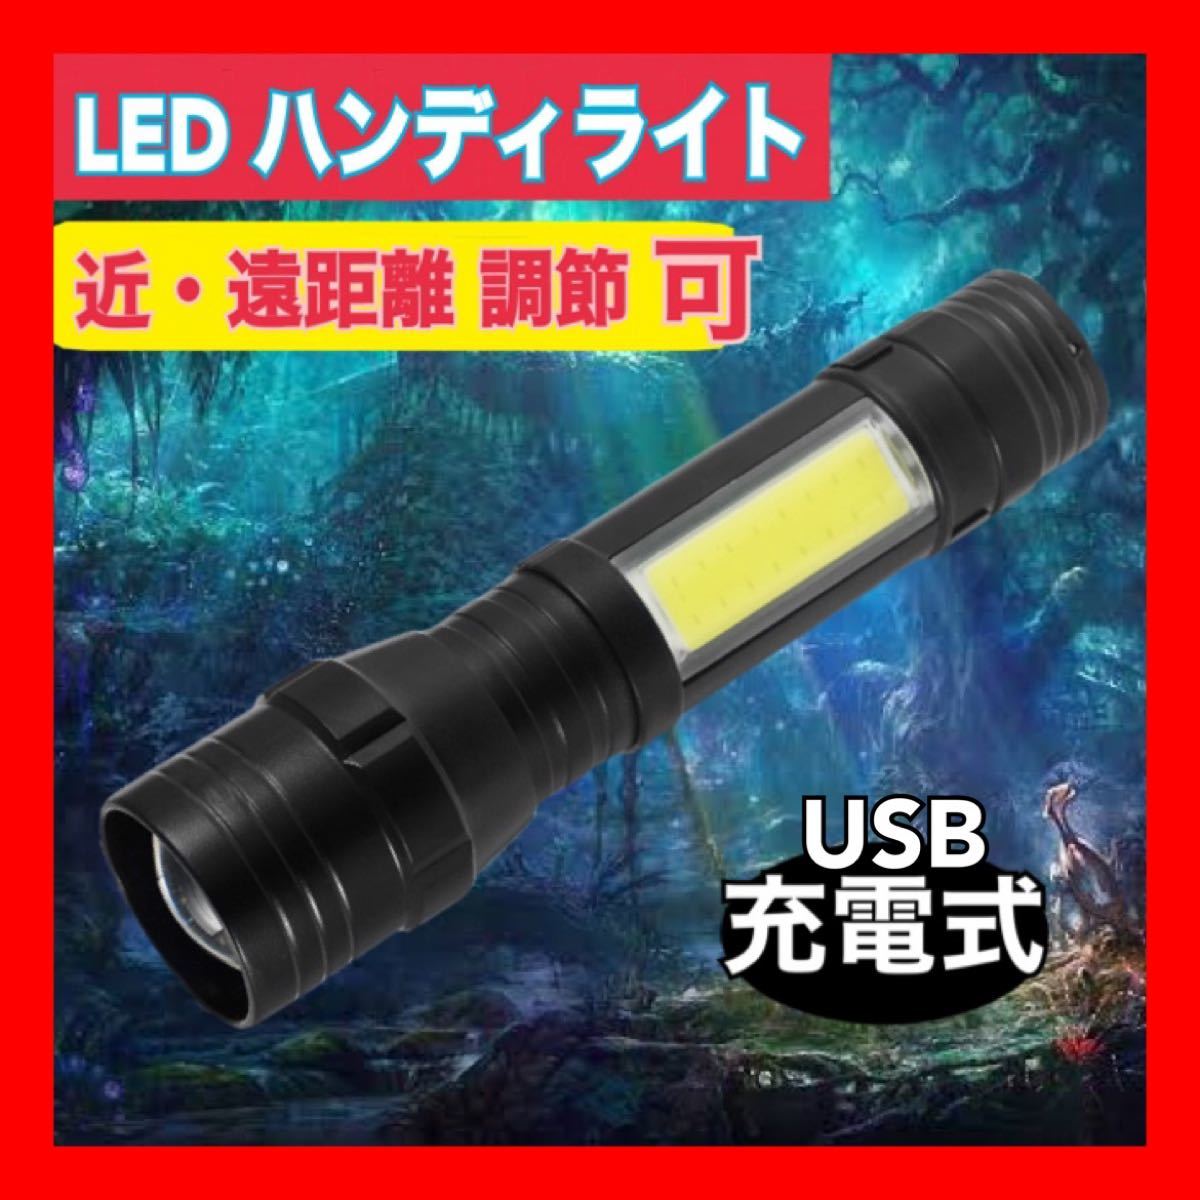 LED LEDハンディライト LED懐中電灯 懐中電灯 高輝度 充電式 作業灯 ハンディライト 高輝度LED フラッシュライト